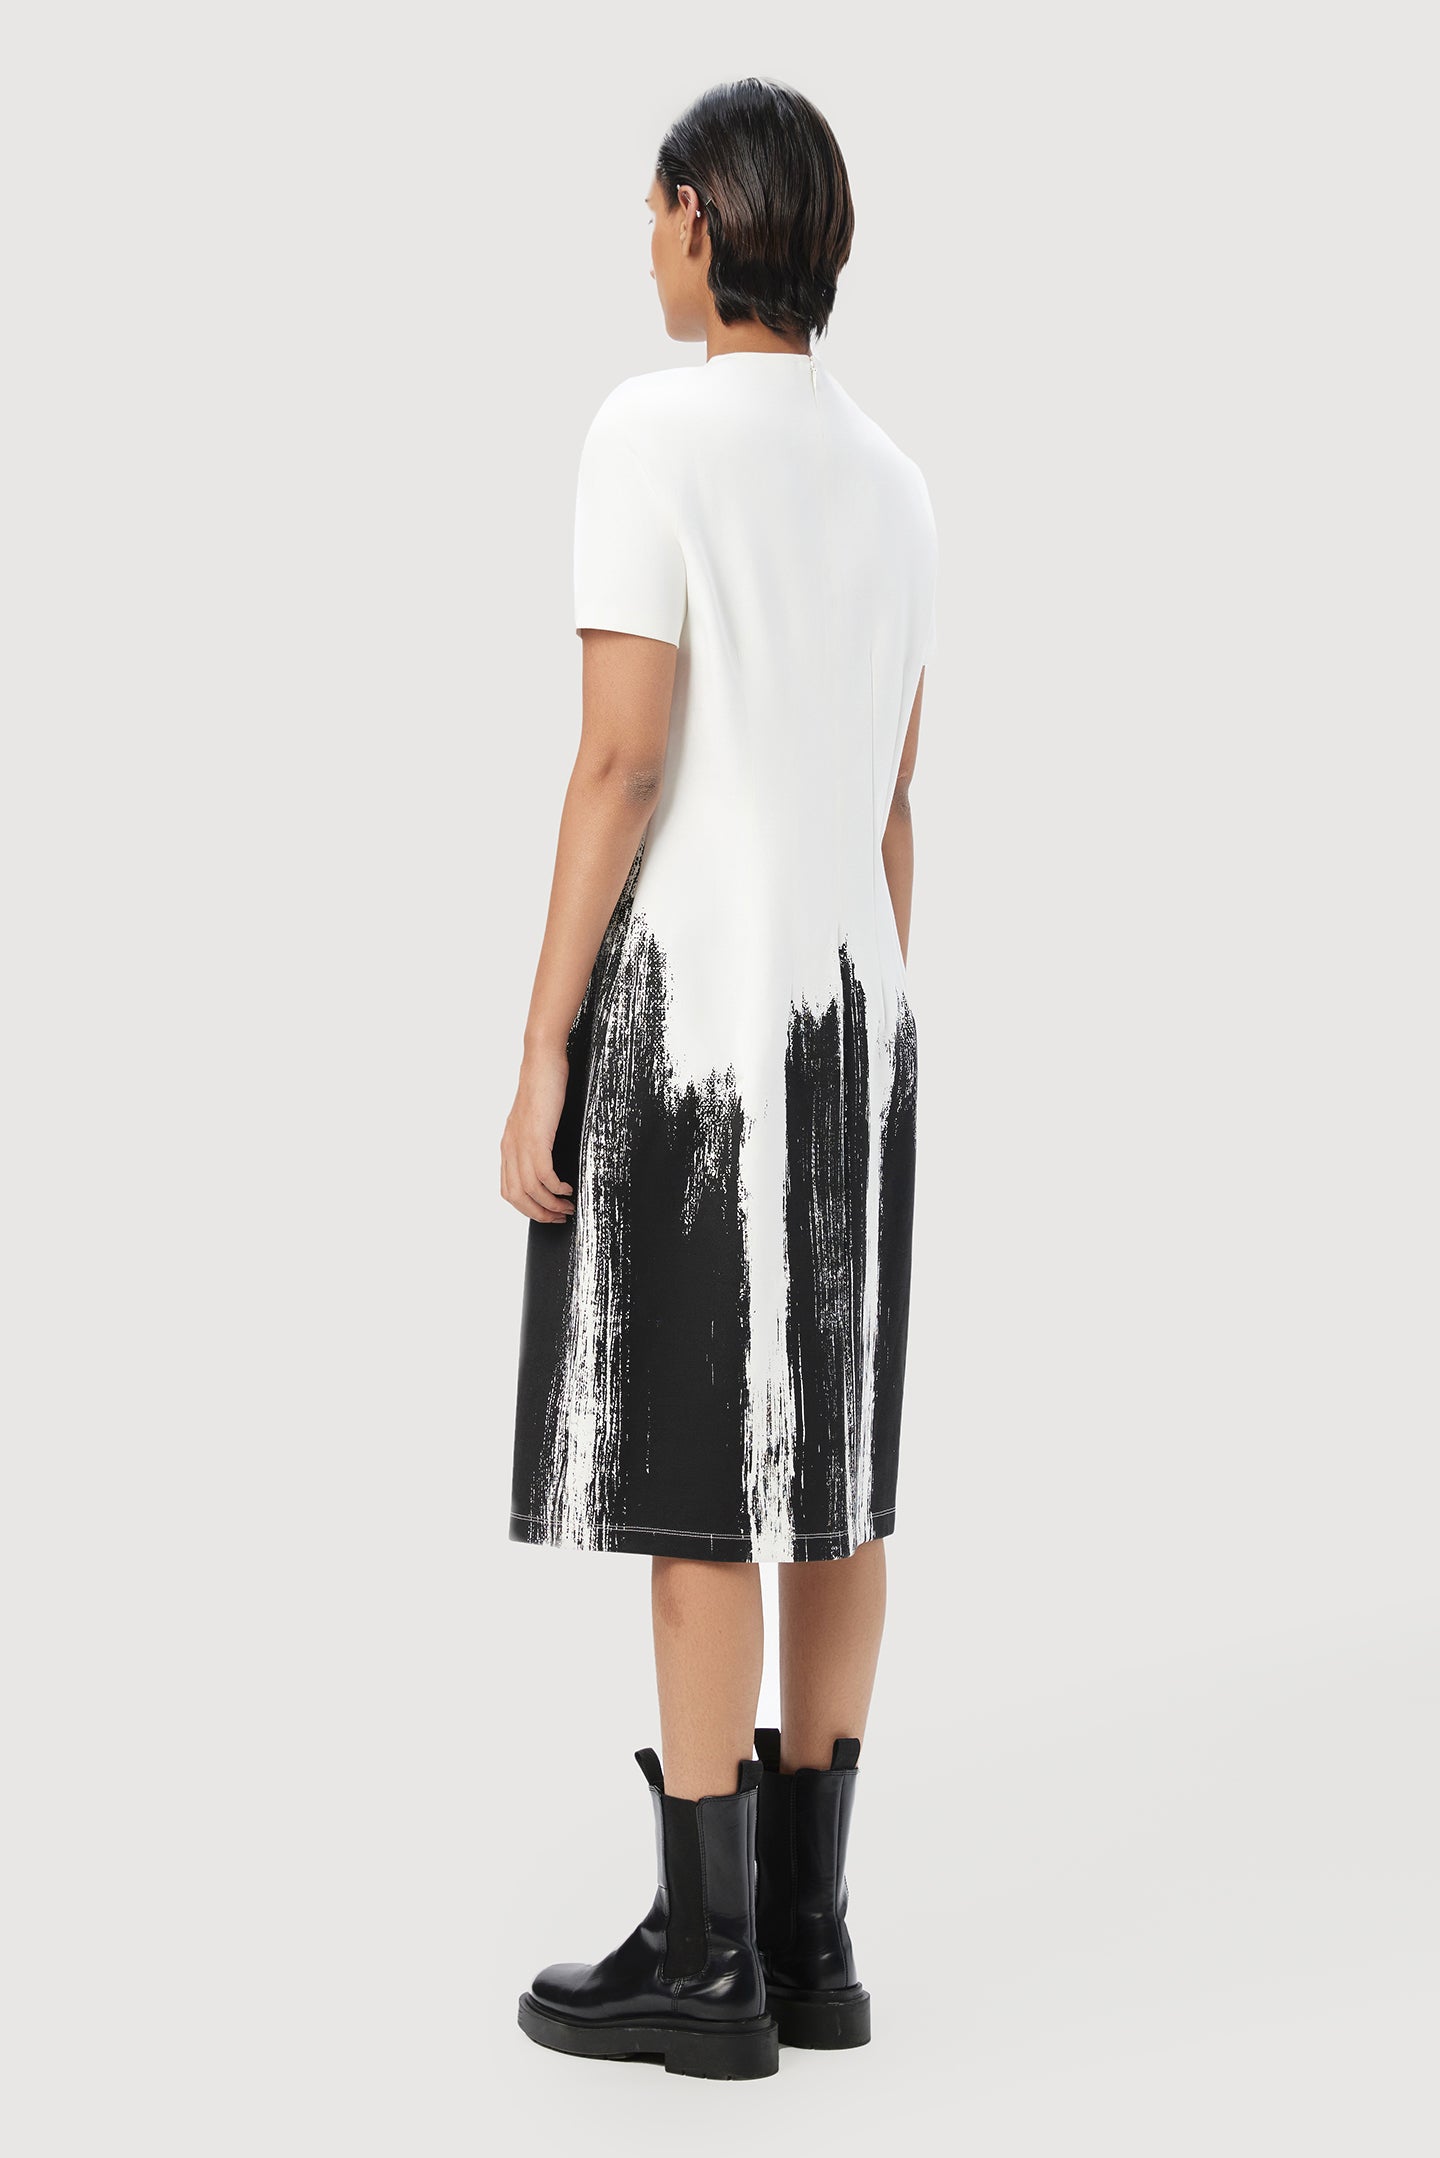 Slim Fit Round Neck Dress with Brush Stroke Print